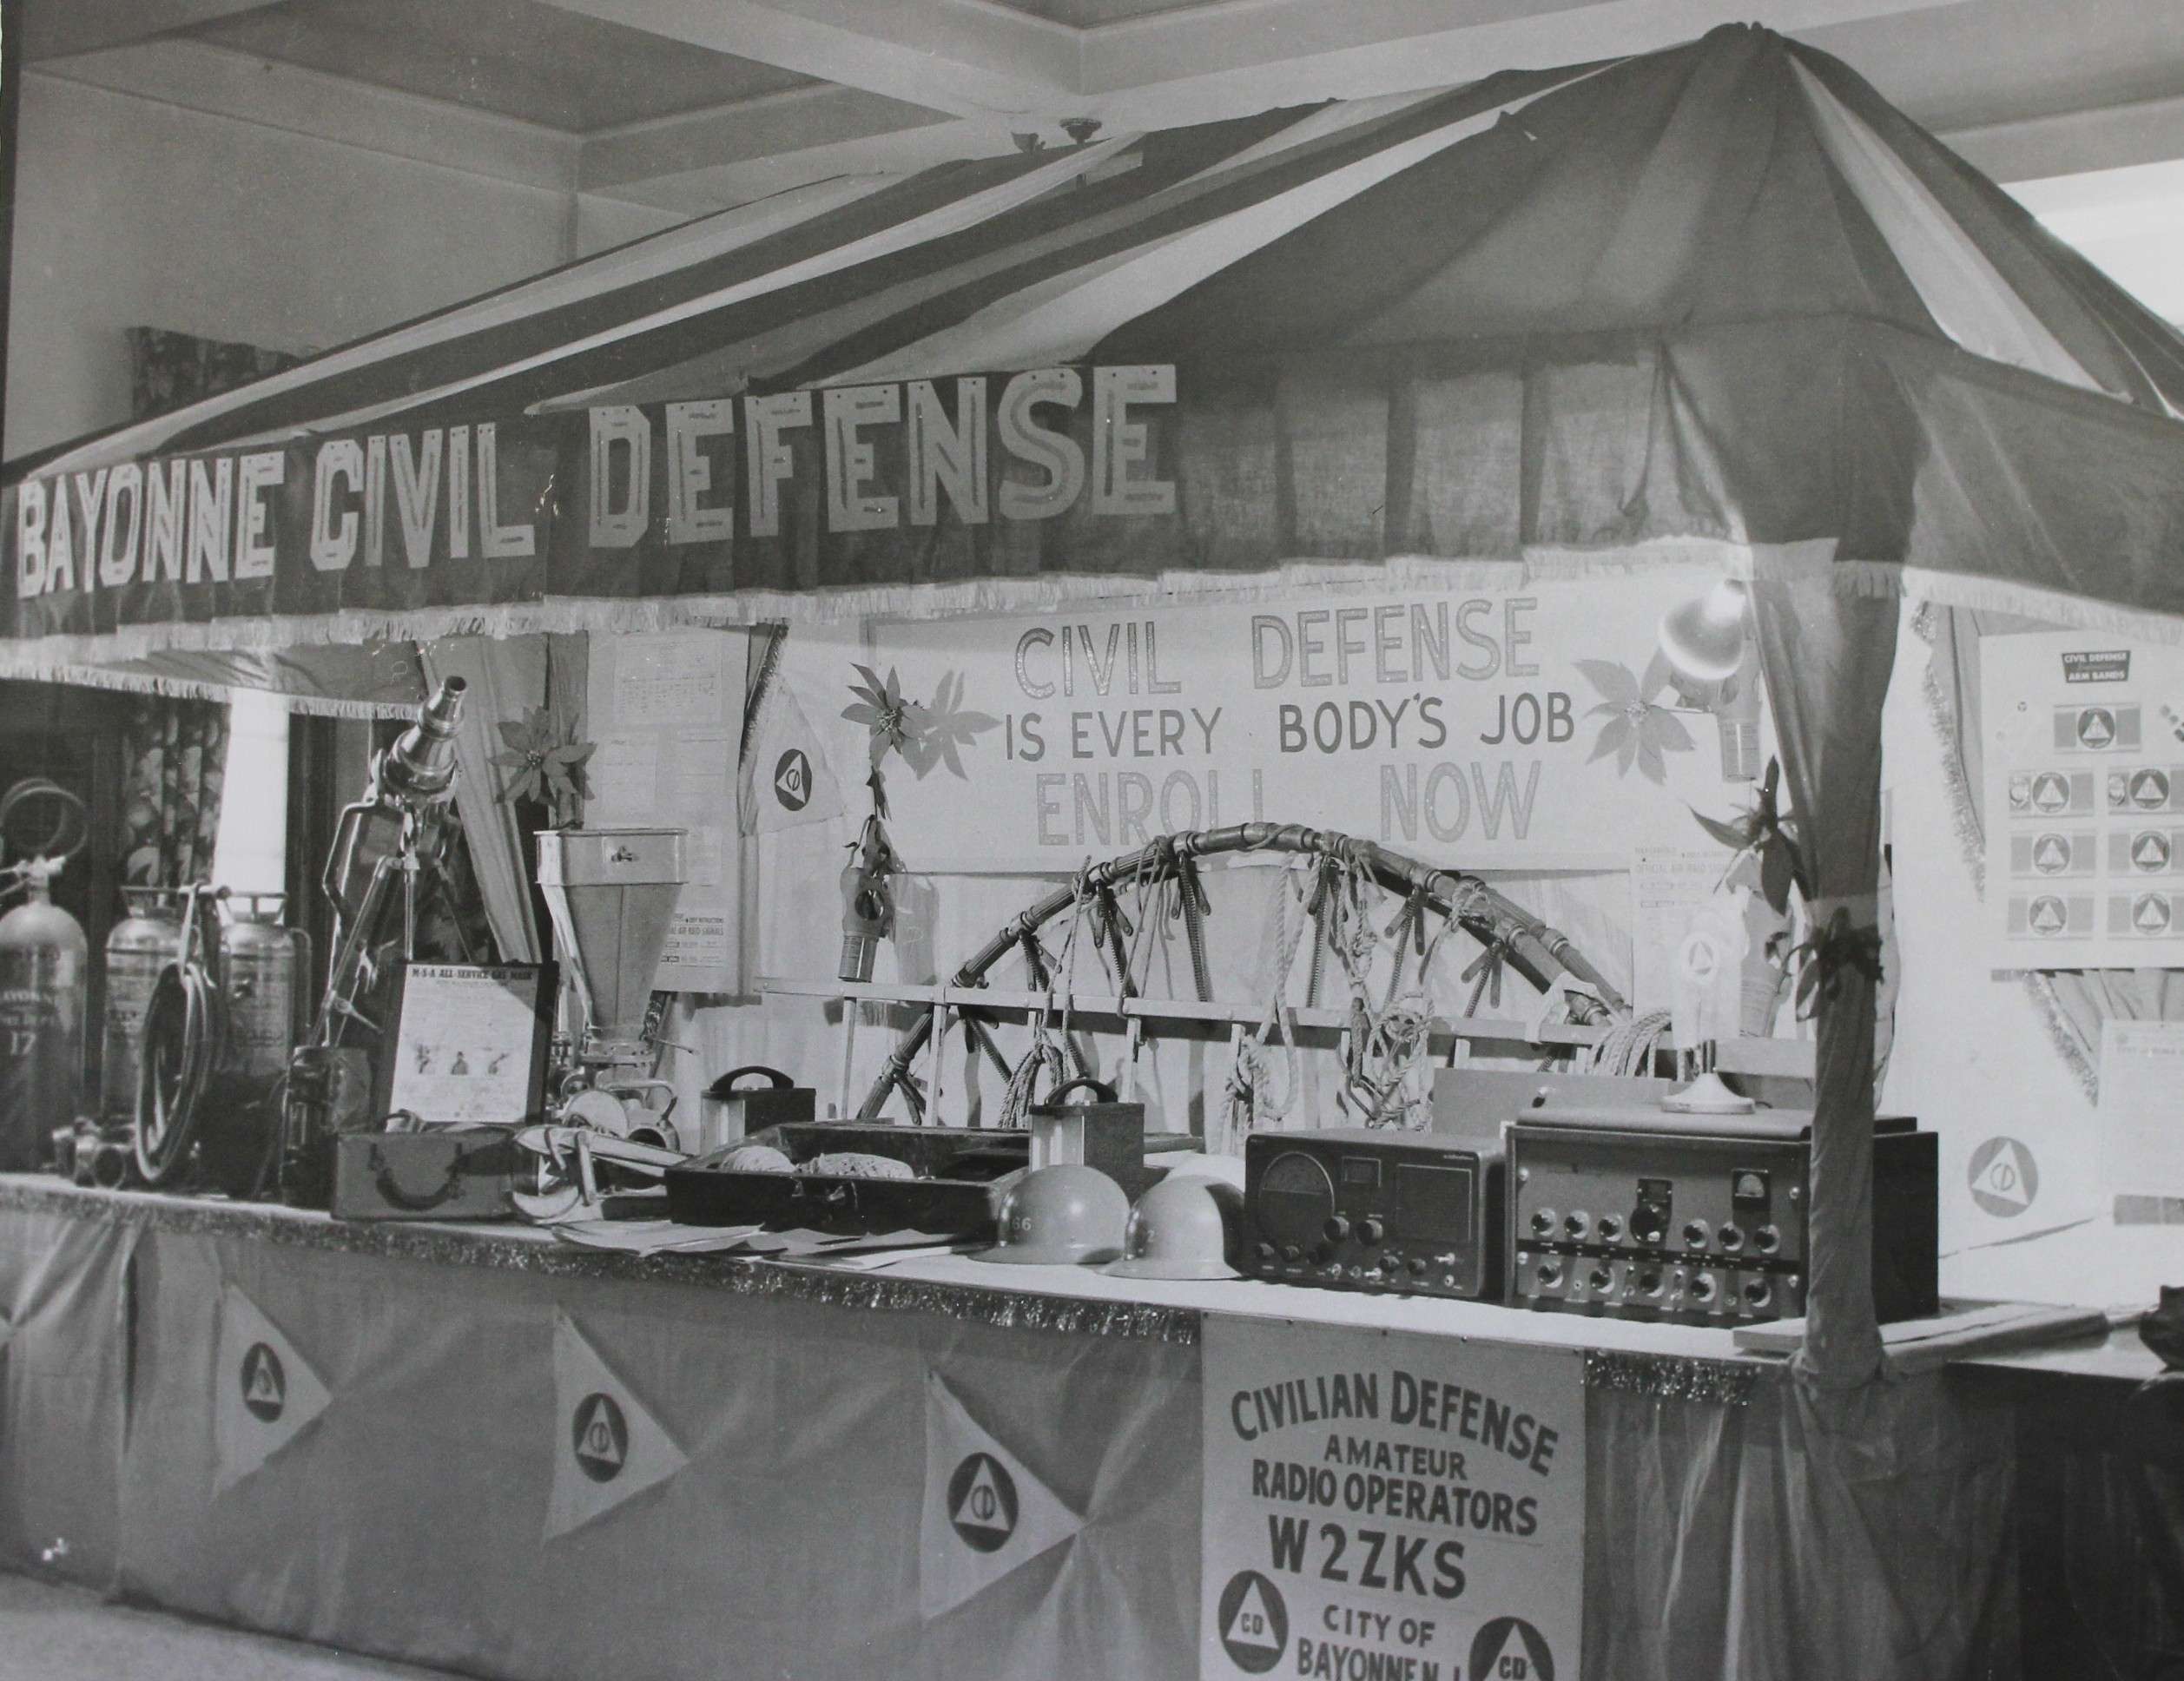 A Civil Defense Recruitment Tent in Bayonne, NJ